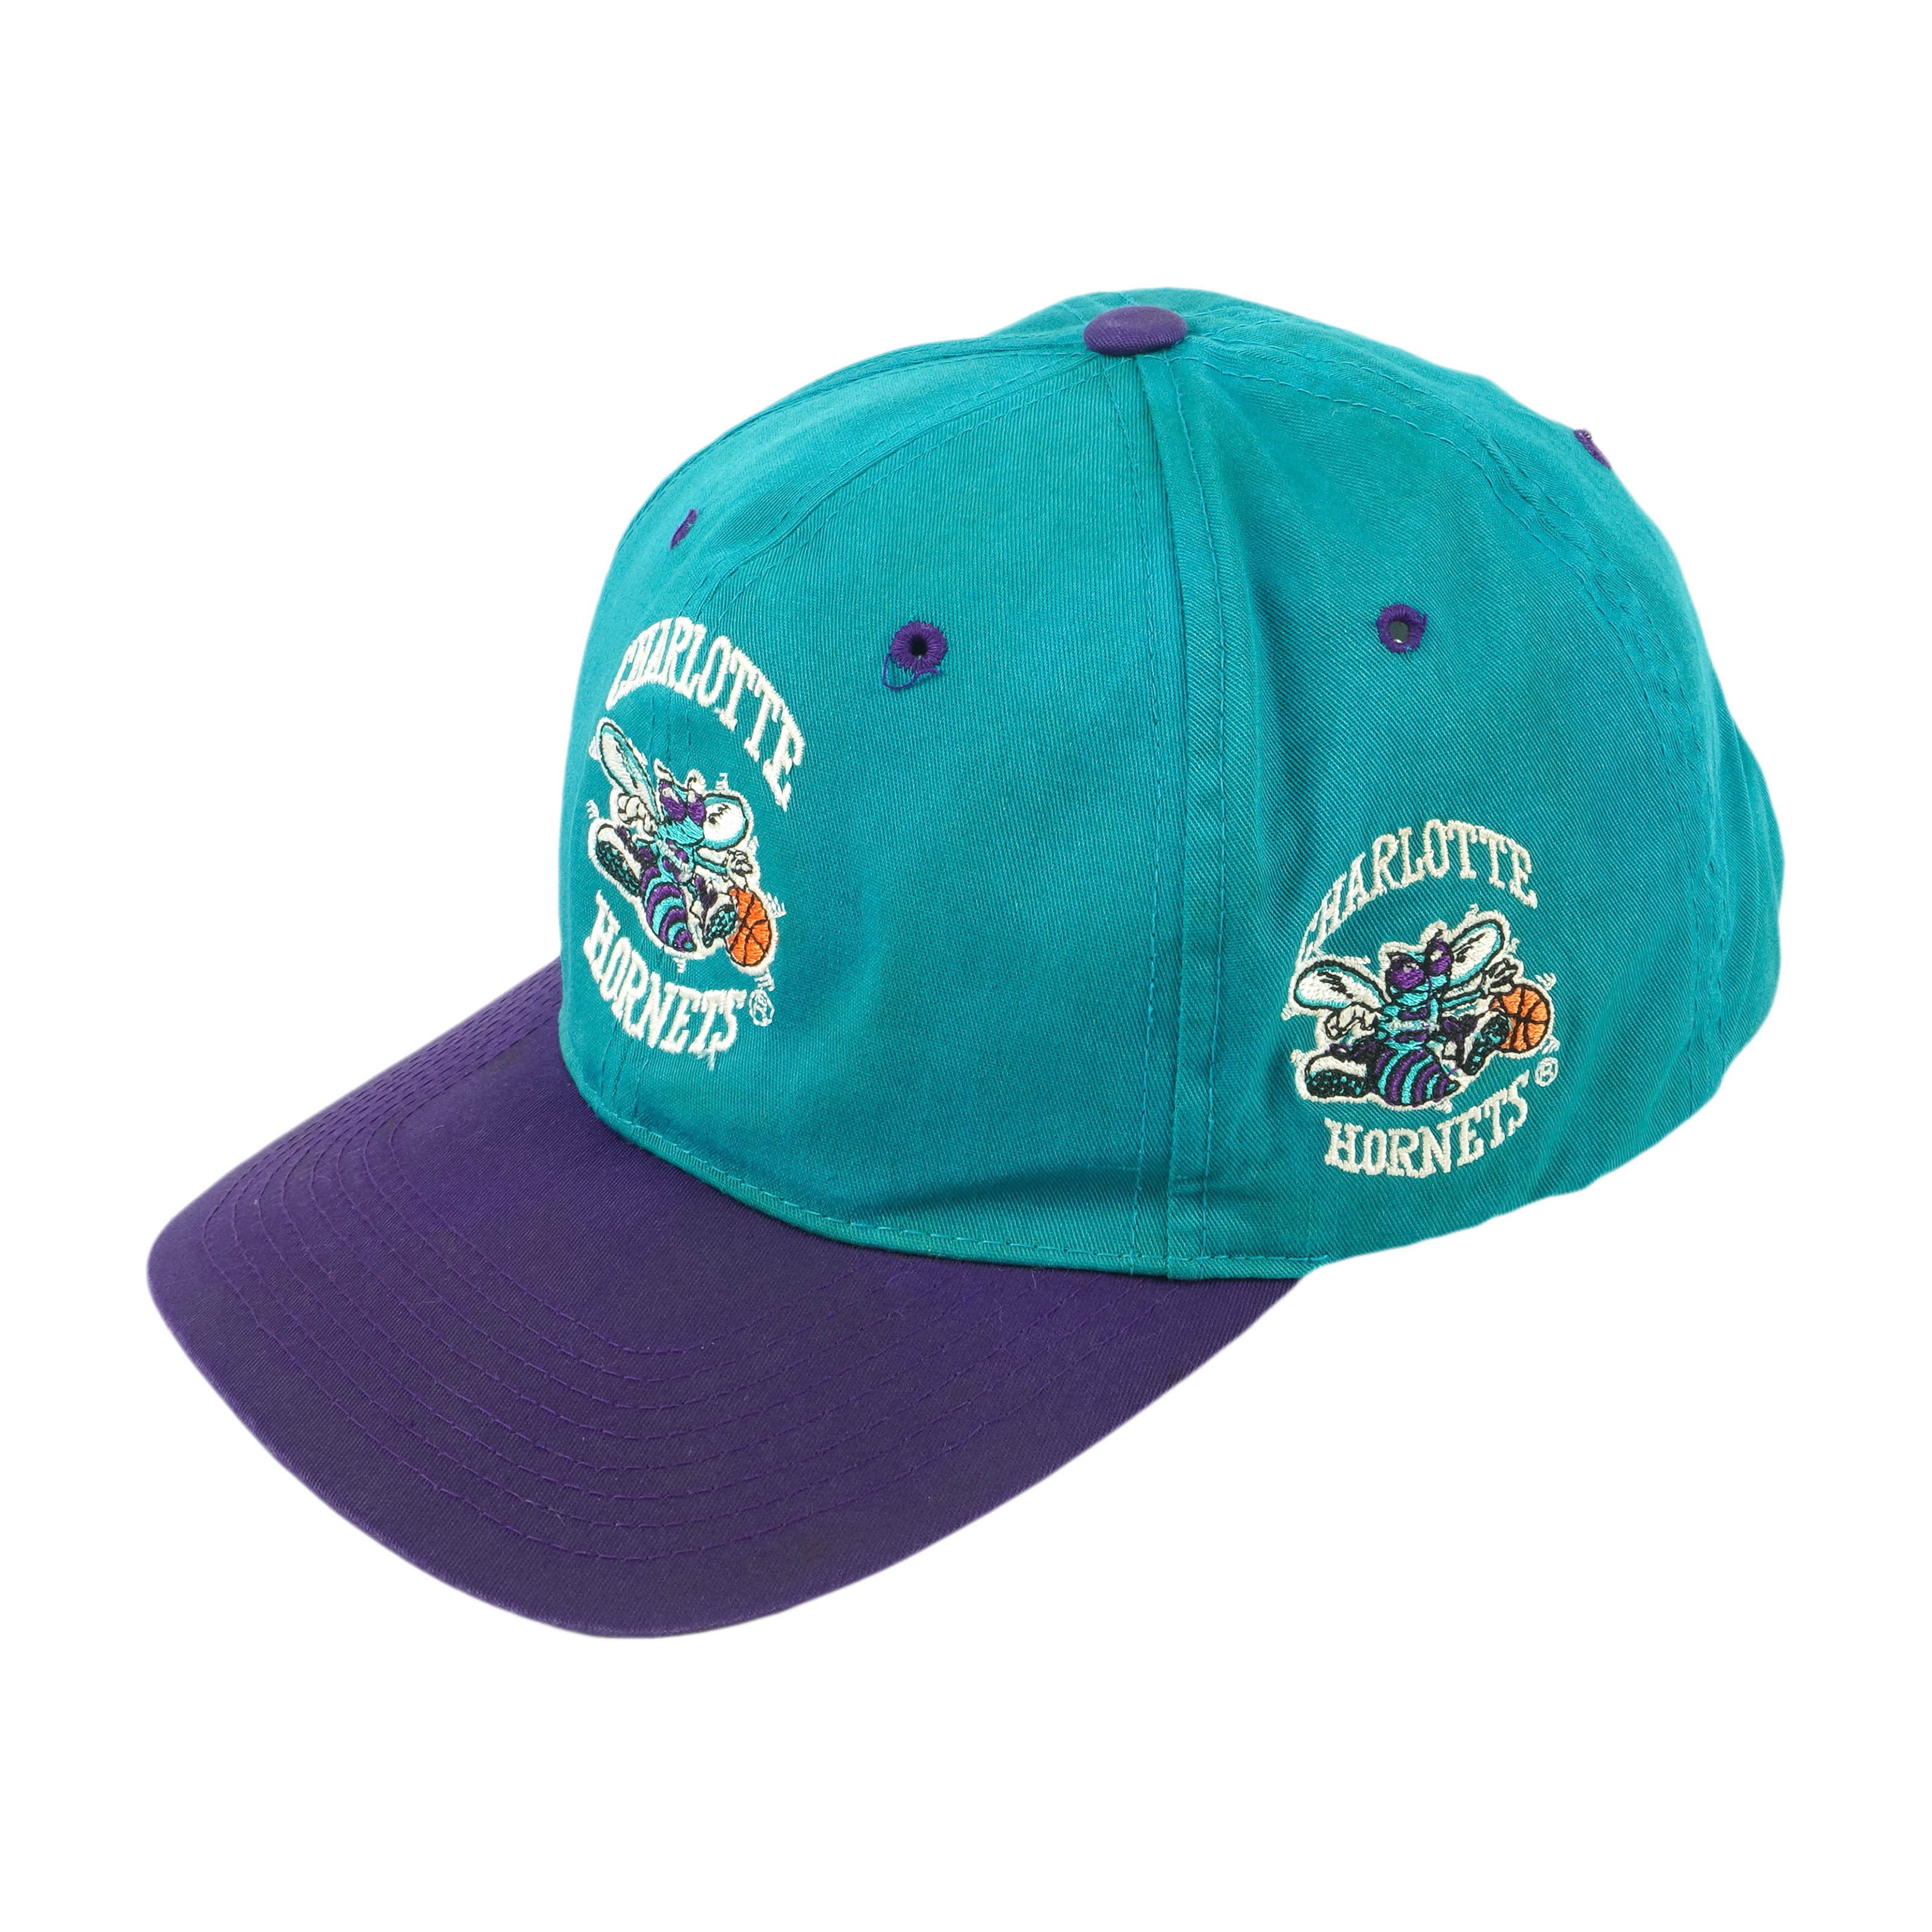 Charlotte Hornets Vintage 90s Starter Snapback Hat- One Size Fits All